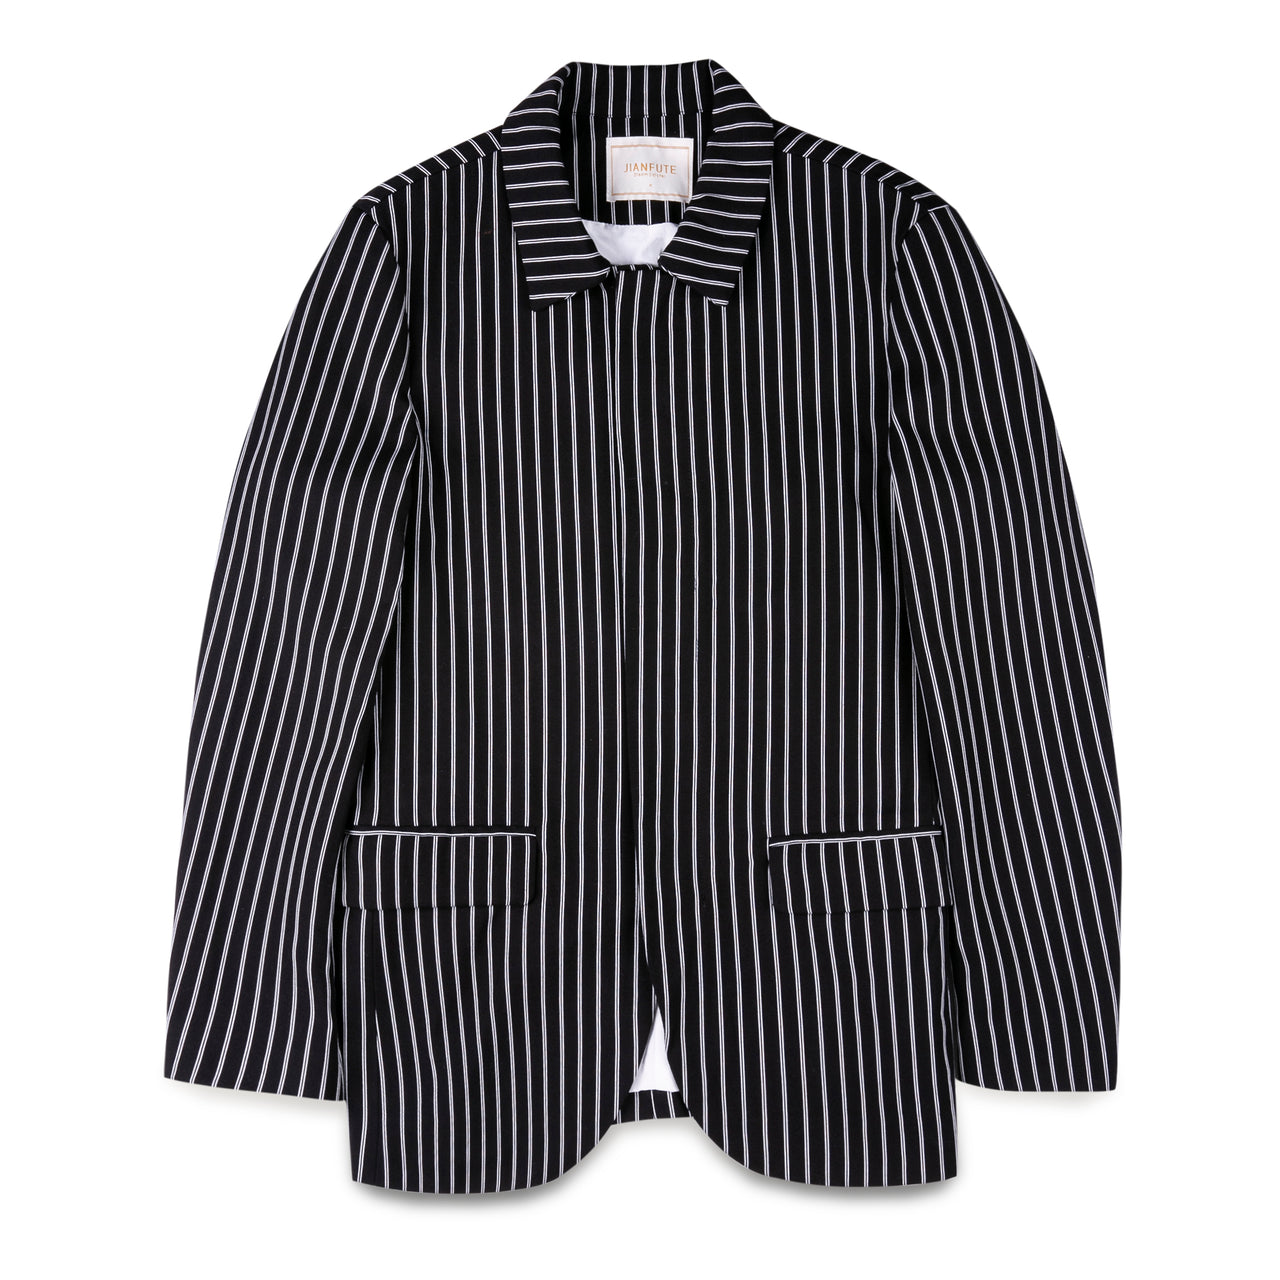 Jianfute Black and White Striped Blazer